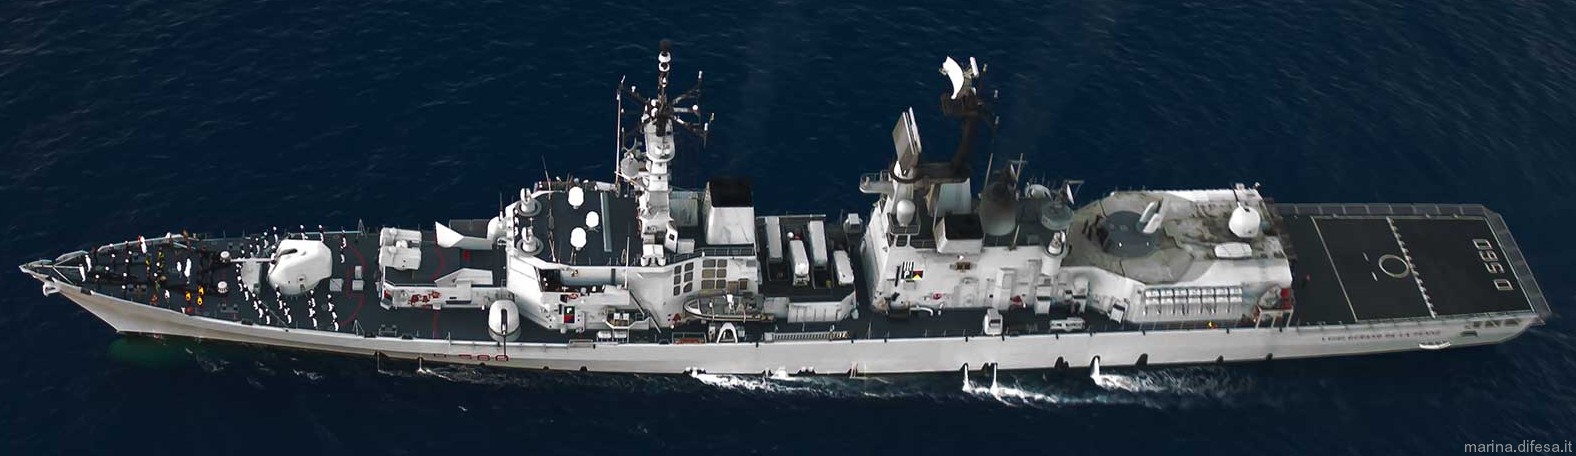 d-560 luigi durand de la penne its nave guided missile destroyer ddg italian navy marina militare 53